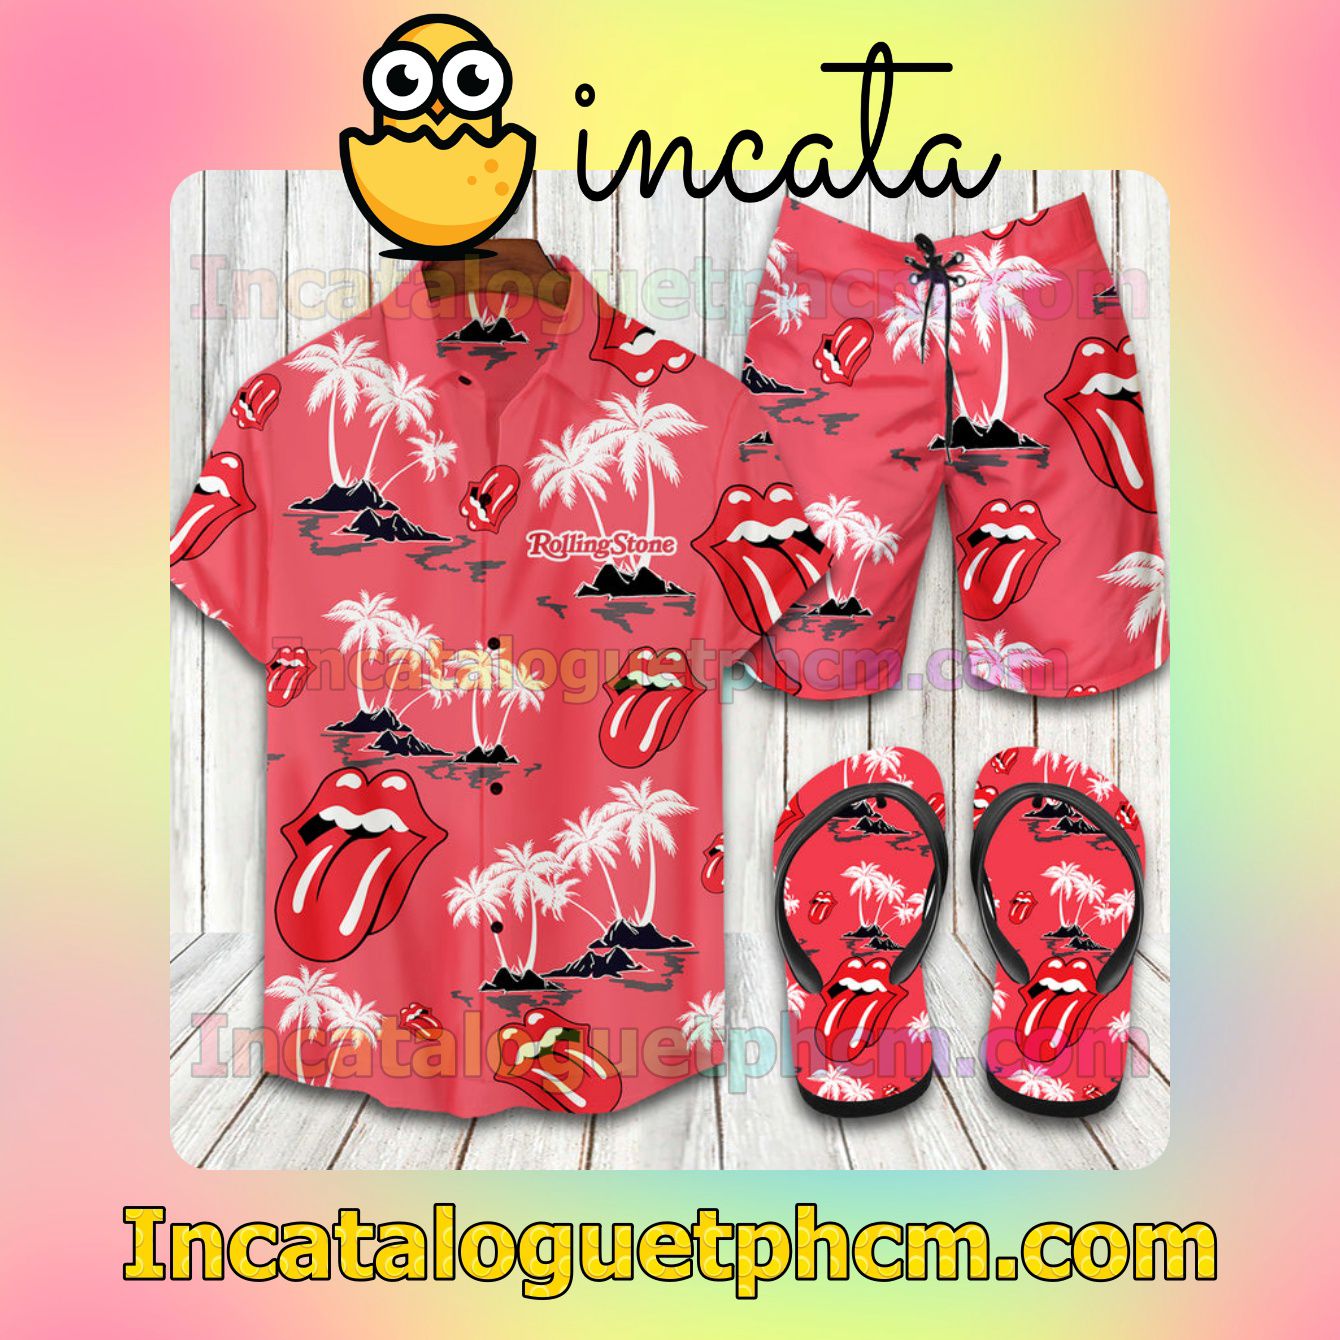 eBay The Rolling Stones Aloha Shirt And Shorts